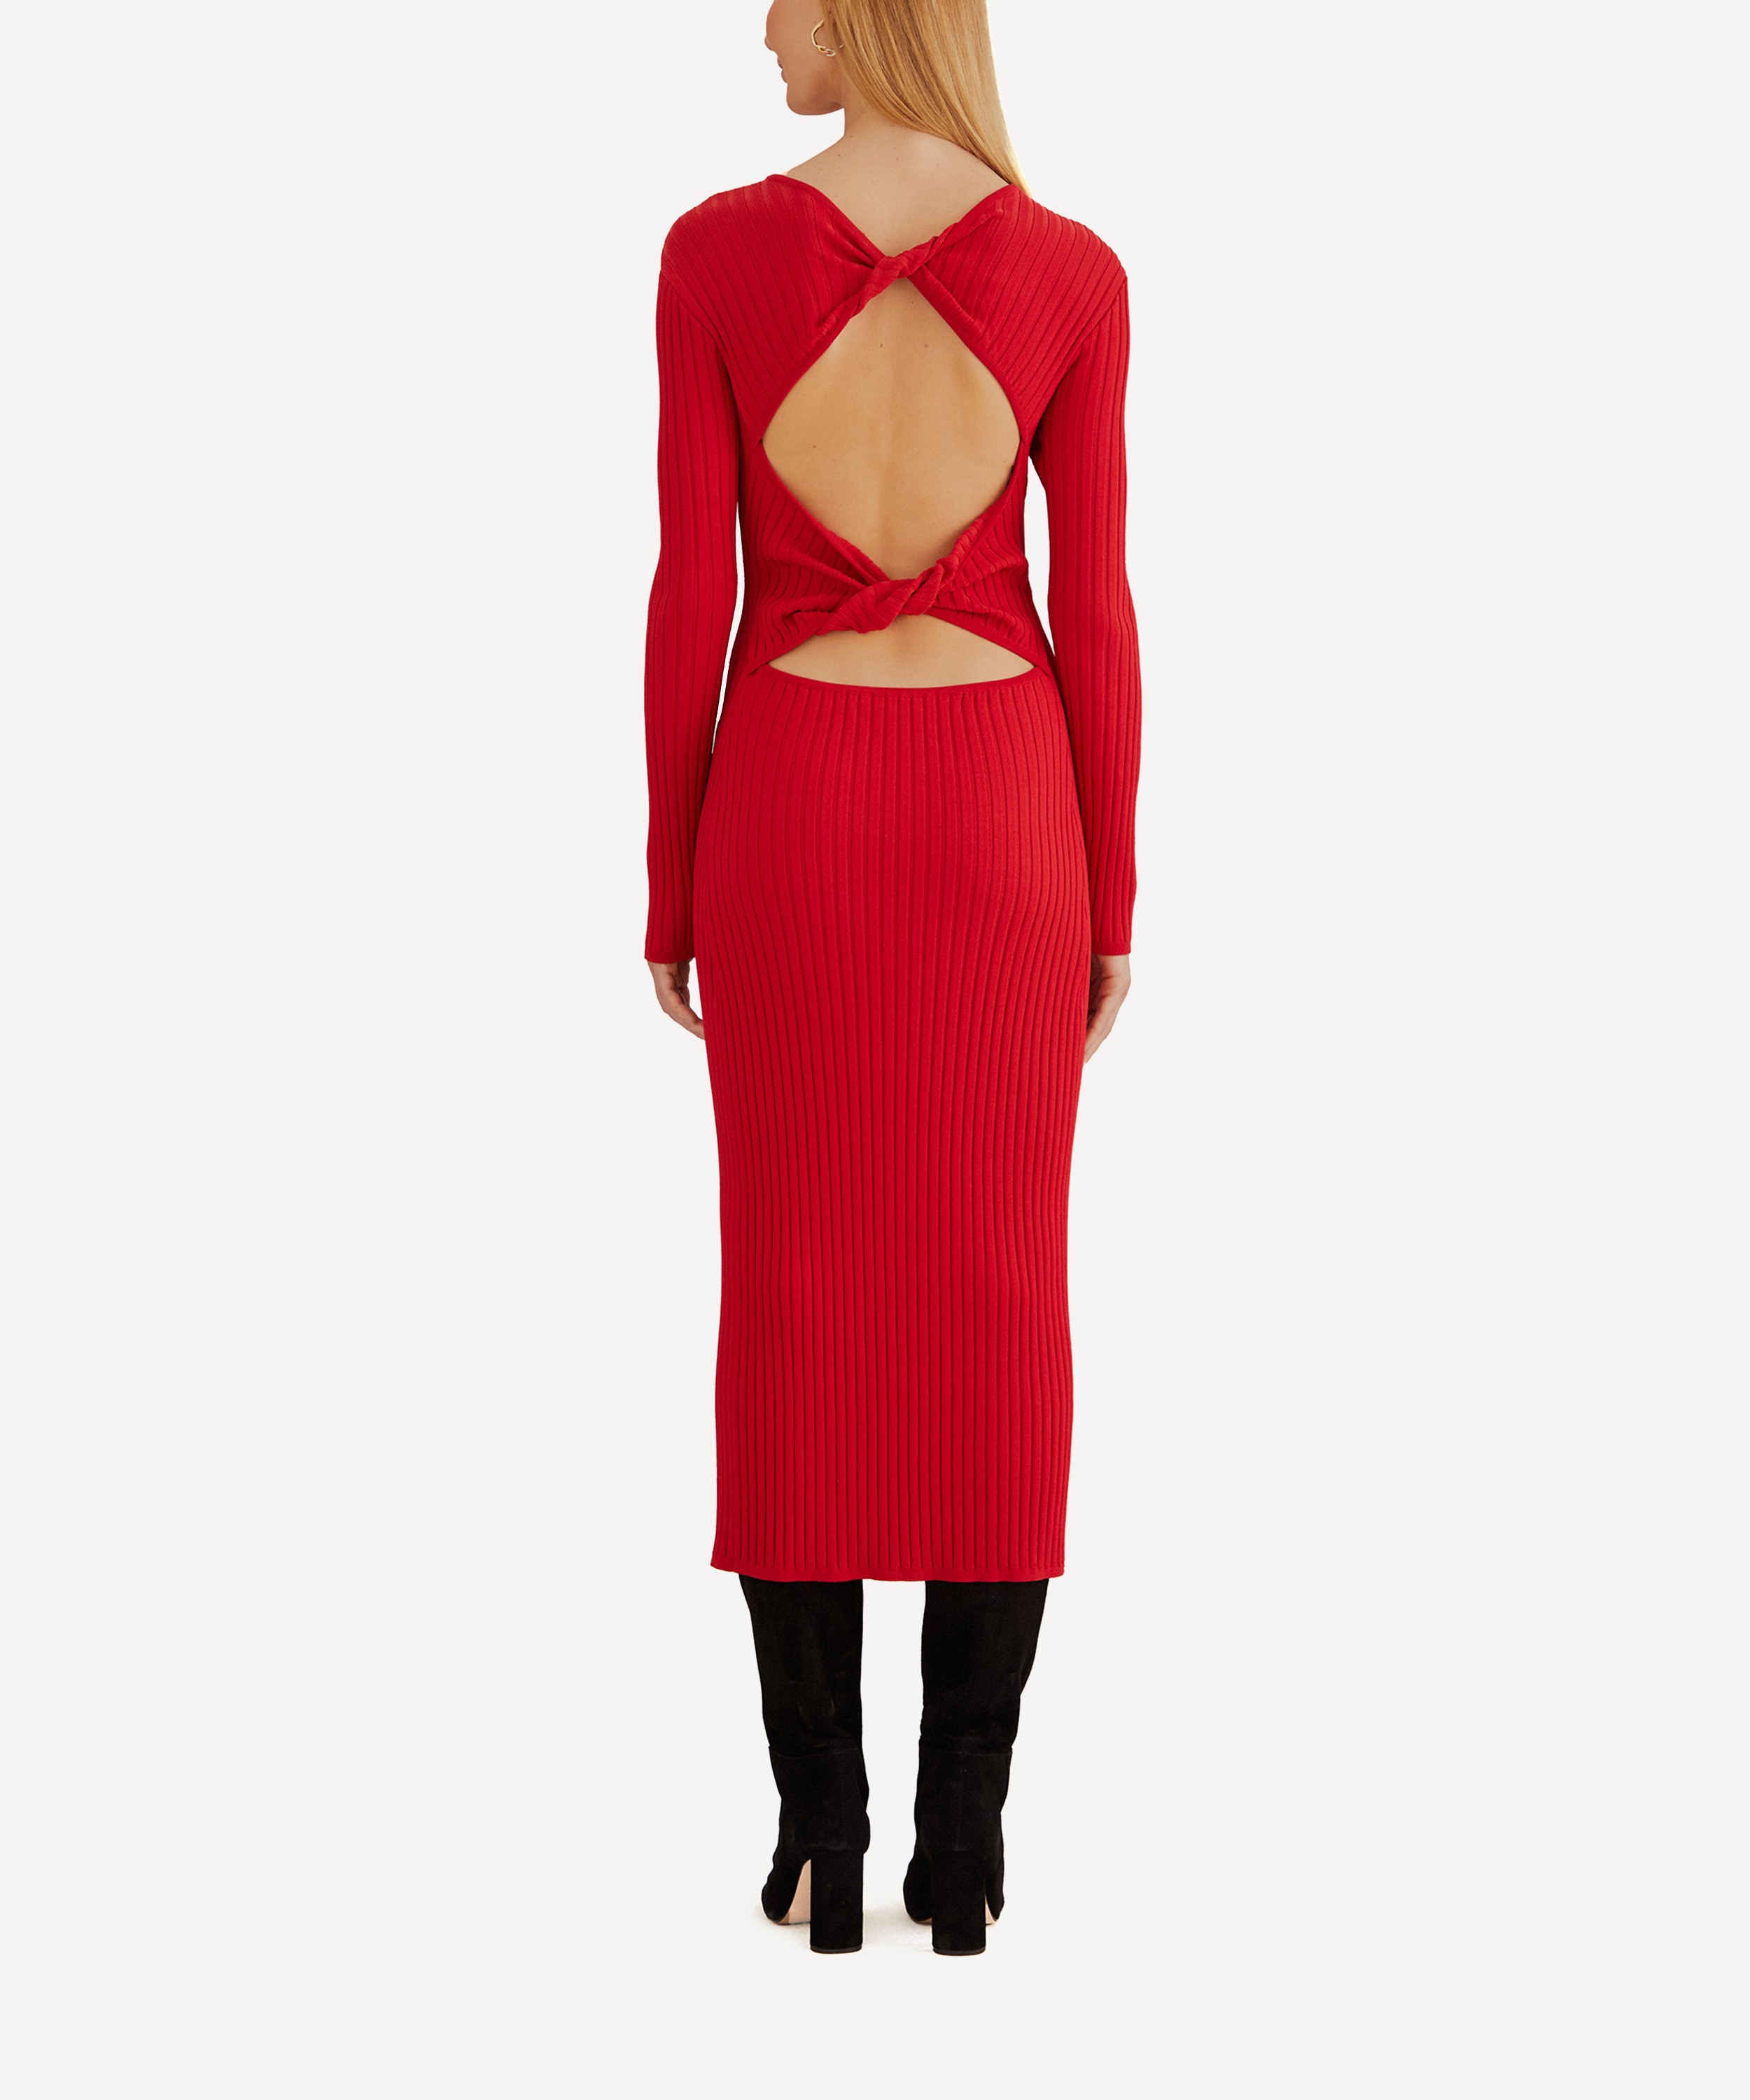 FARM Rio - Red Knit Midi-Dress image number 2